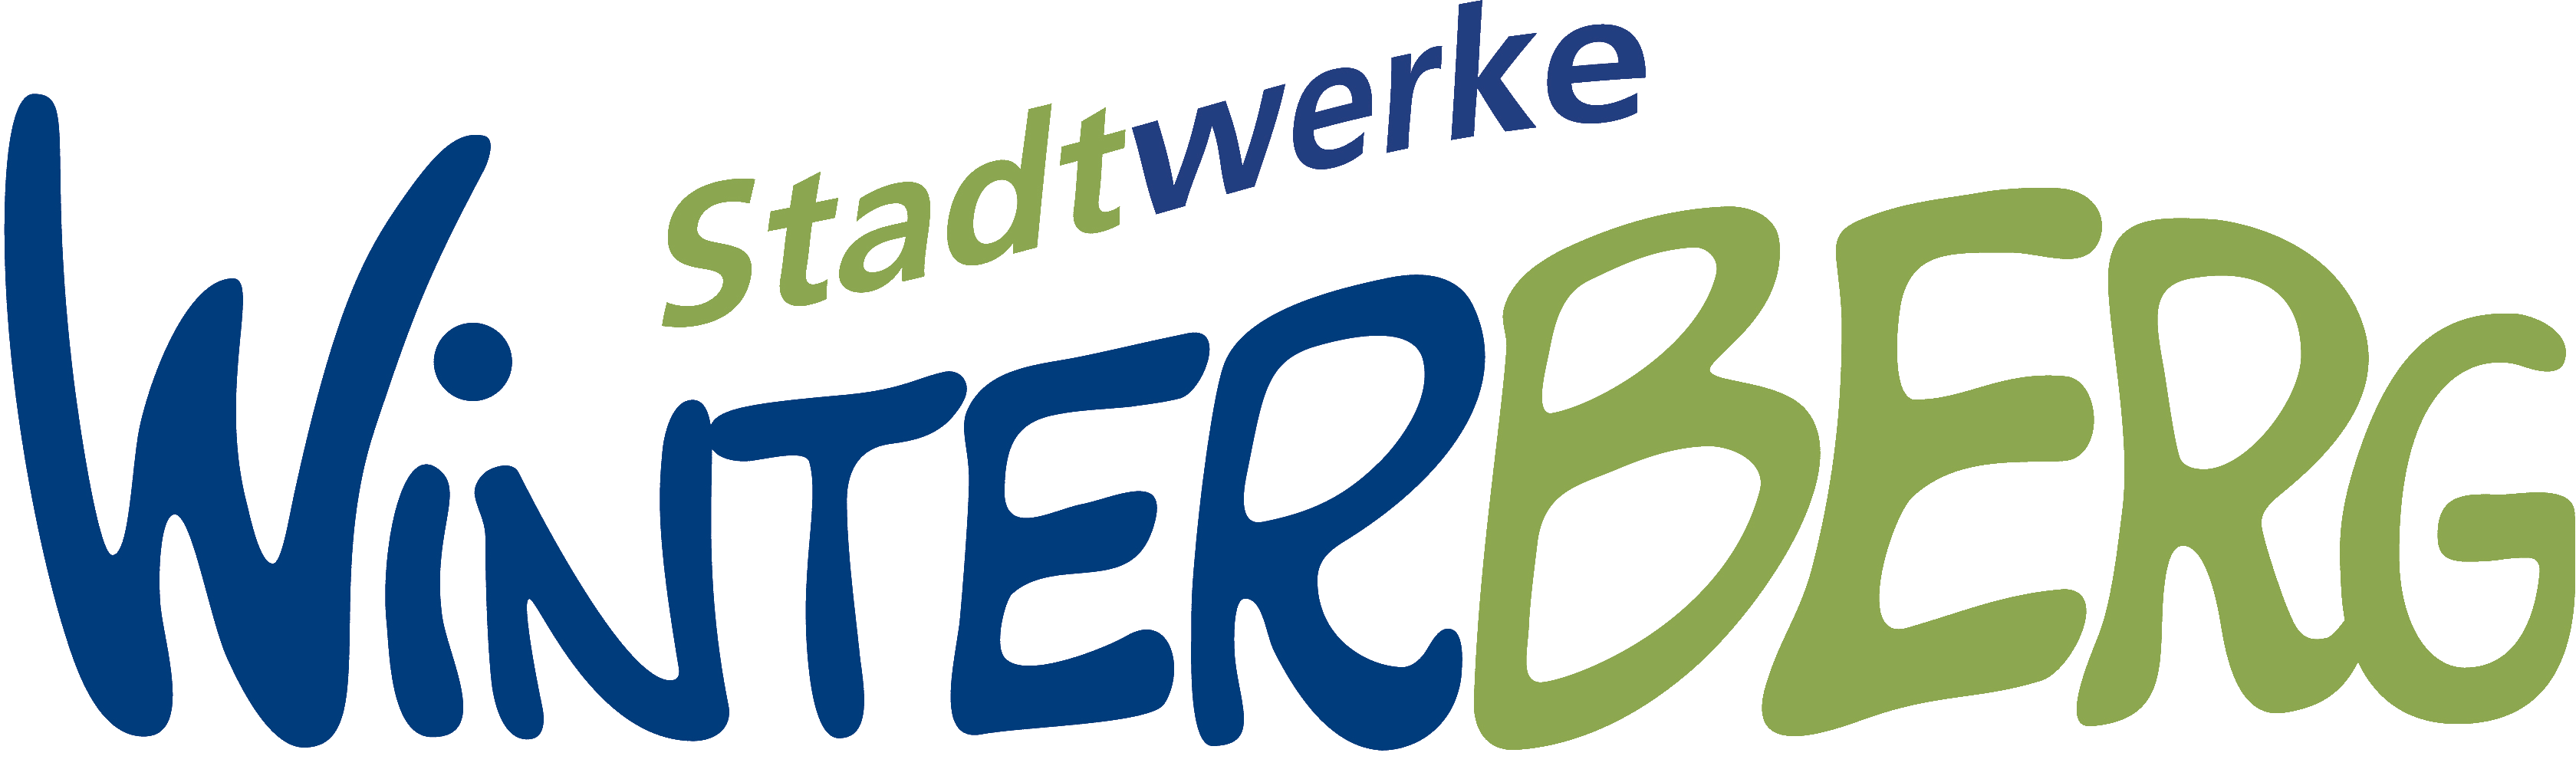 Logo Winterberg